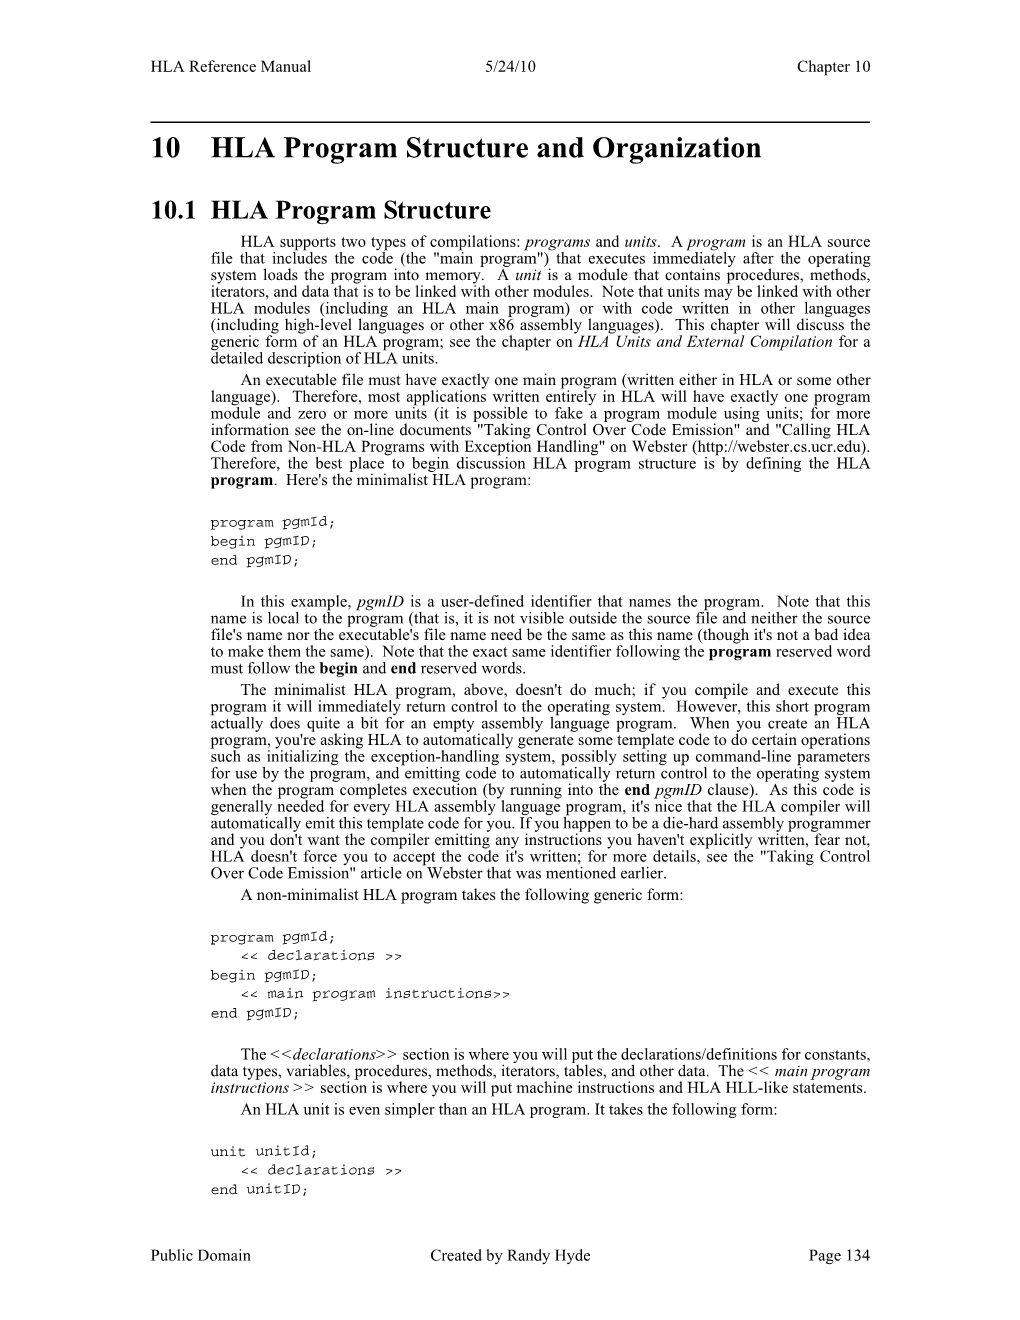 10 HLA Program Structure and Organization